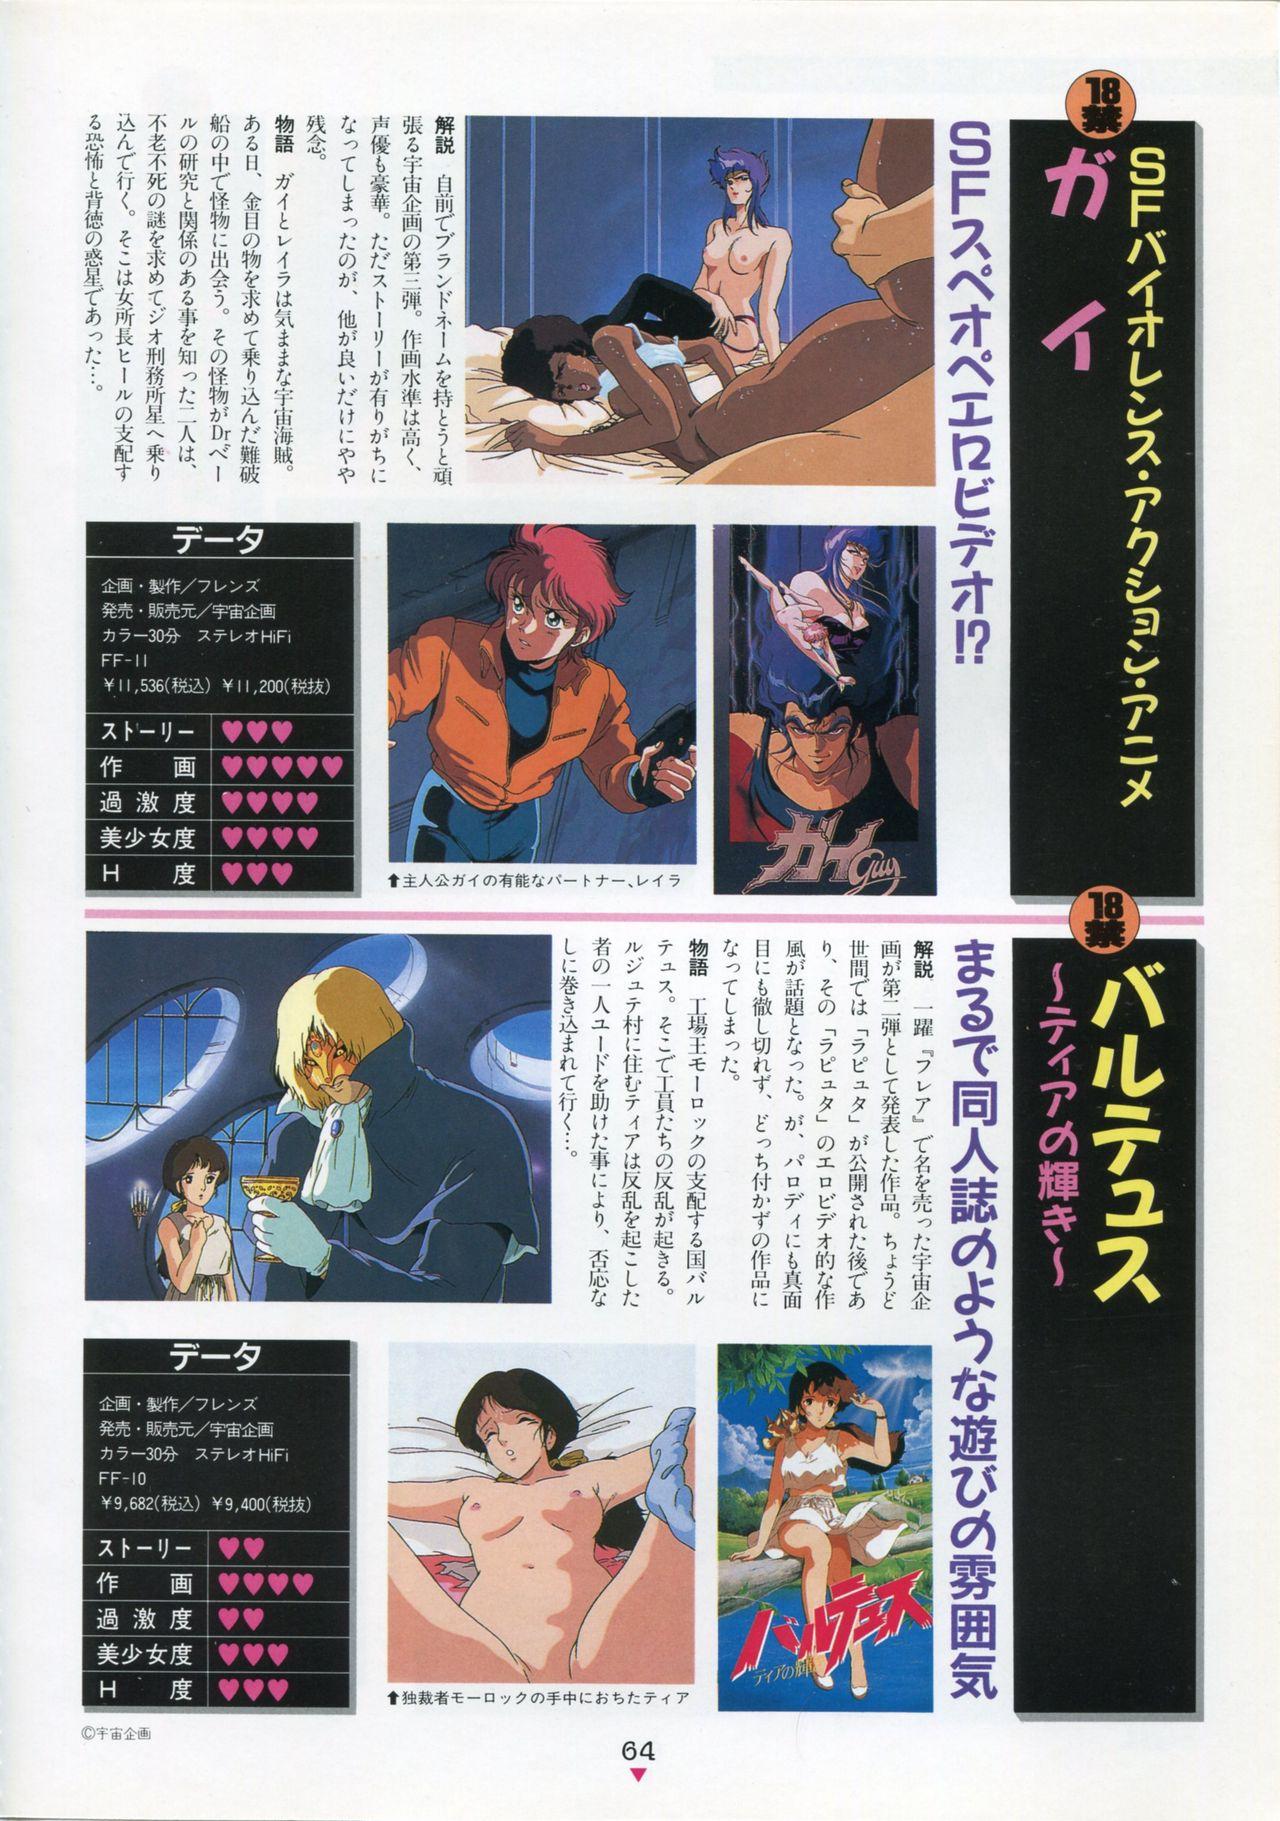 Bishoujo Anime Daizenshuu - Adult Animation Video Catalog 1991 59